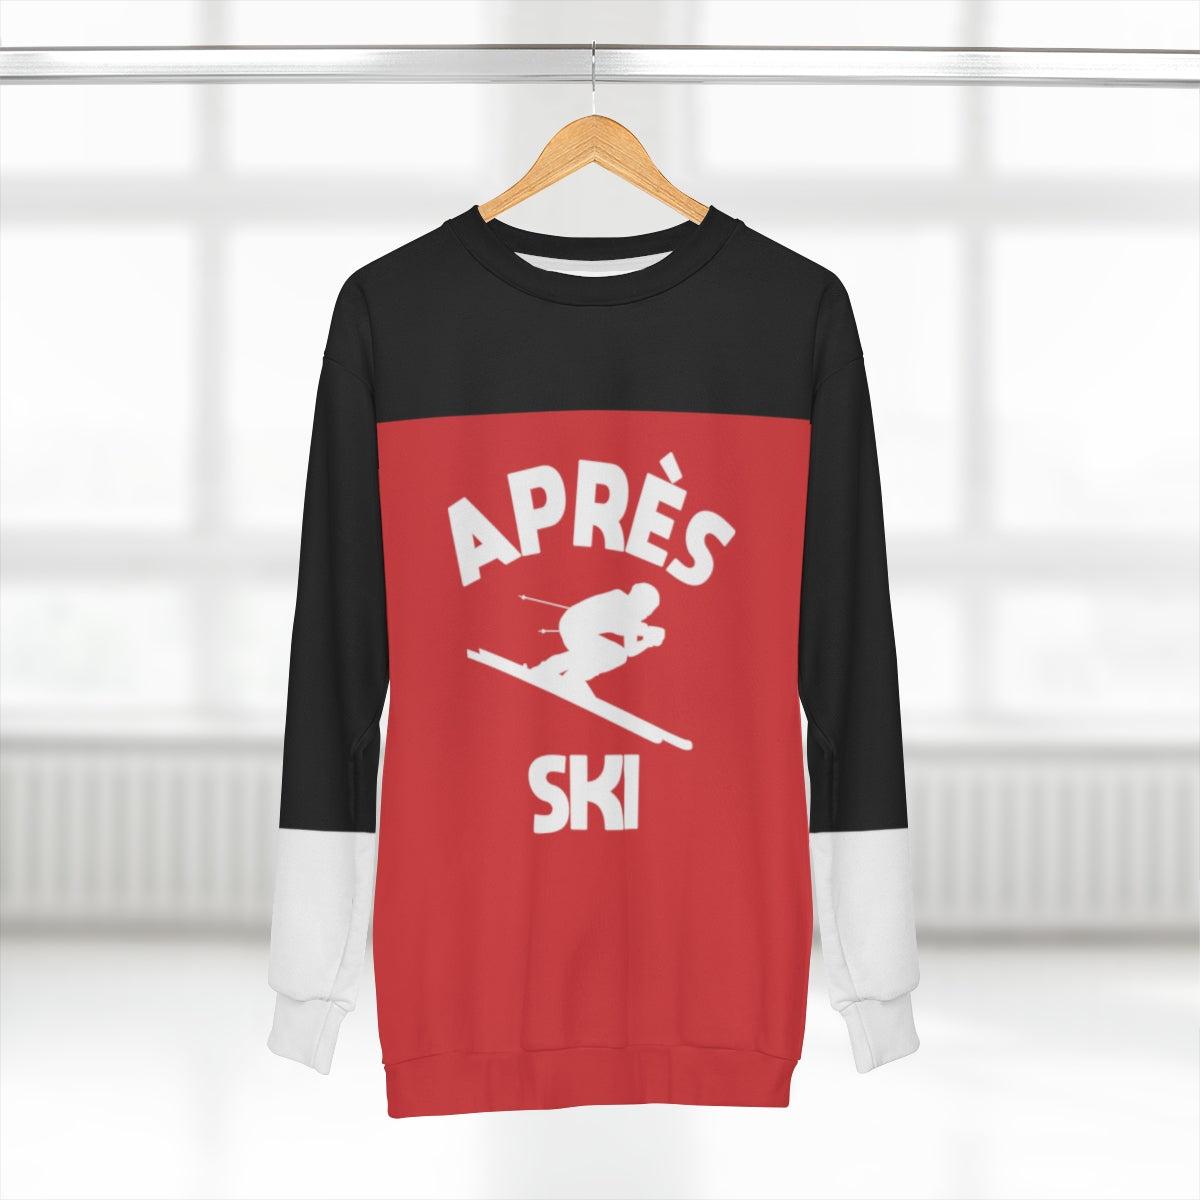 Apres Ski Sweatshirt, Black Red White Sweater, Alpine Skier Skiing Downhill Winter Sports Vintage 80s 90s Men Women Color Block Starcove Fashion